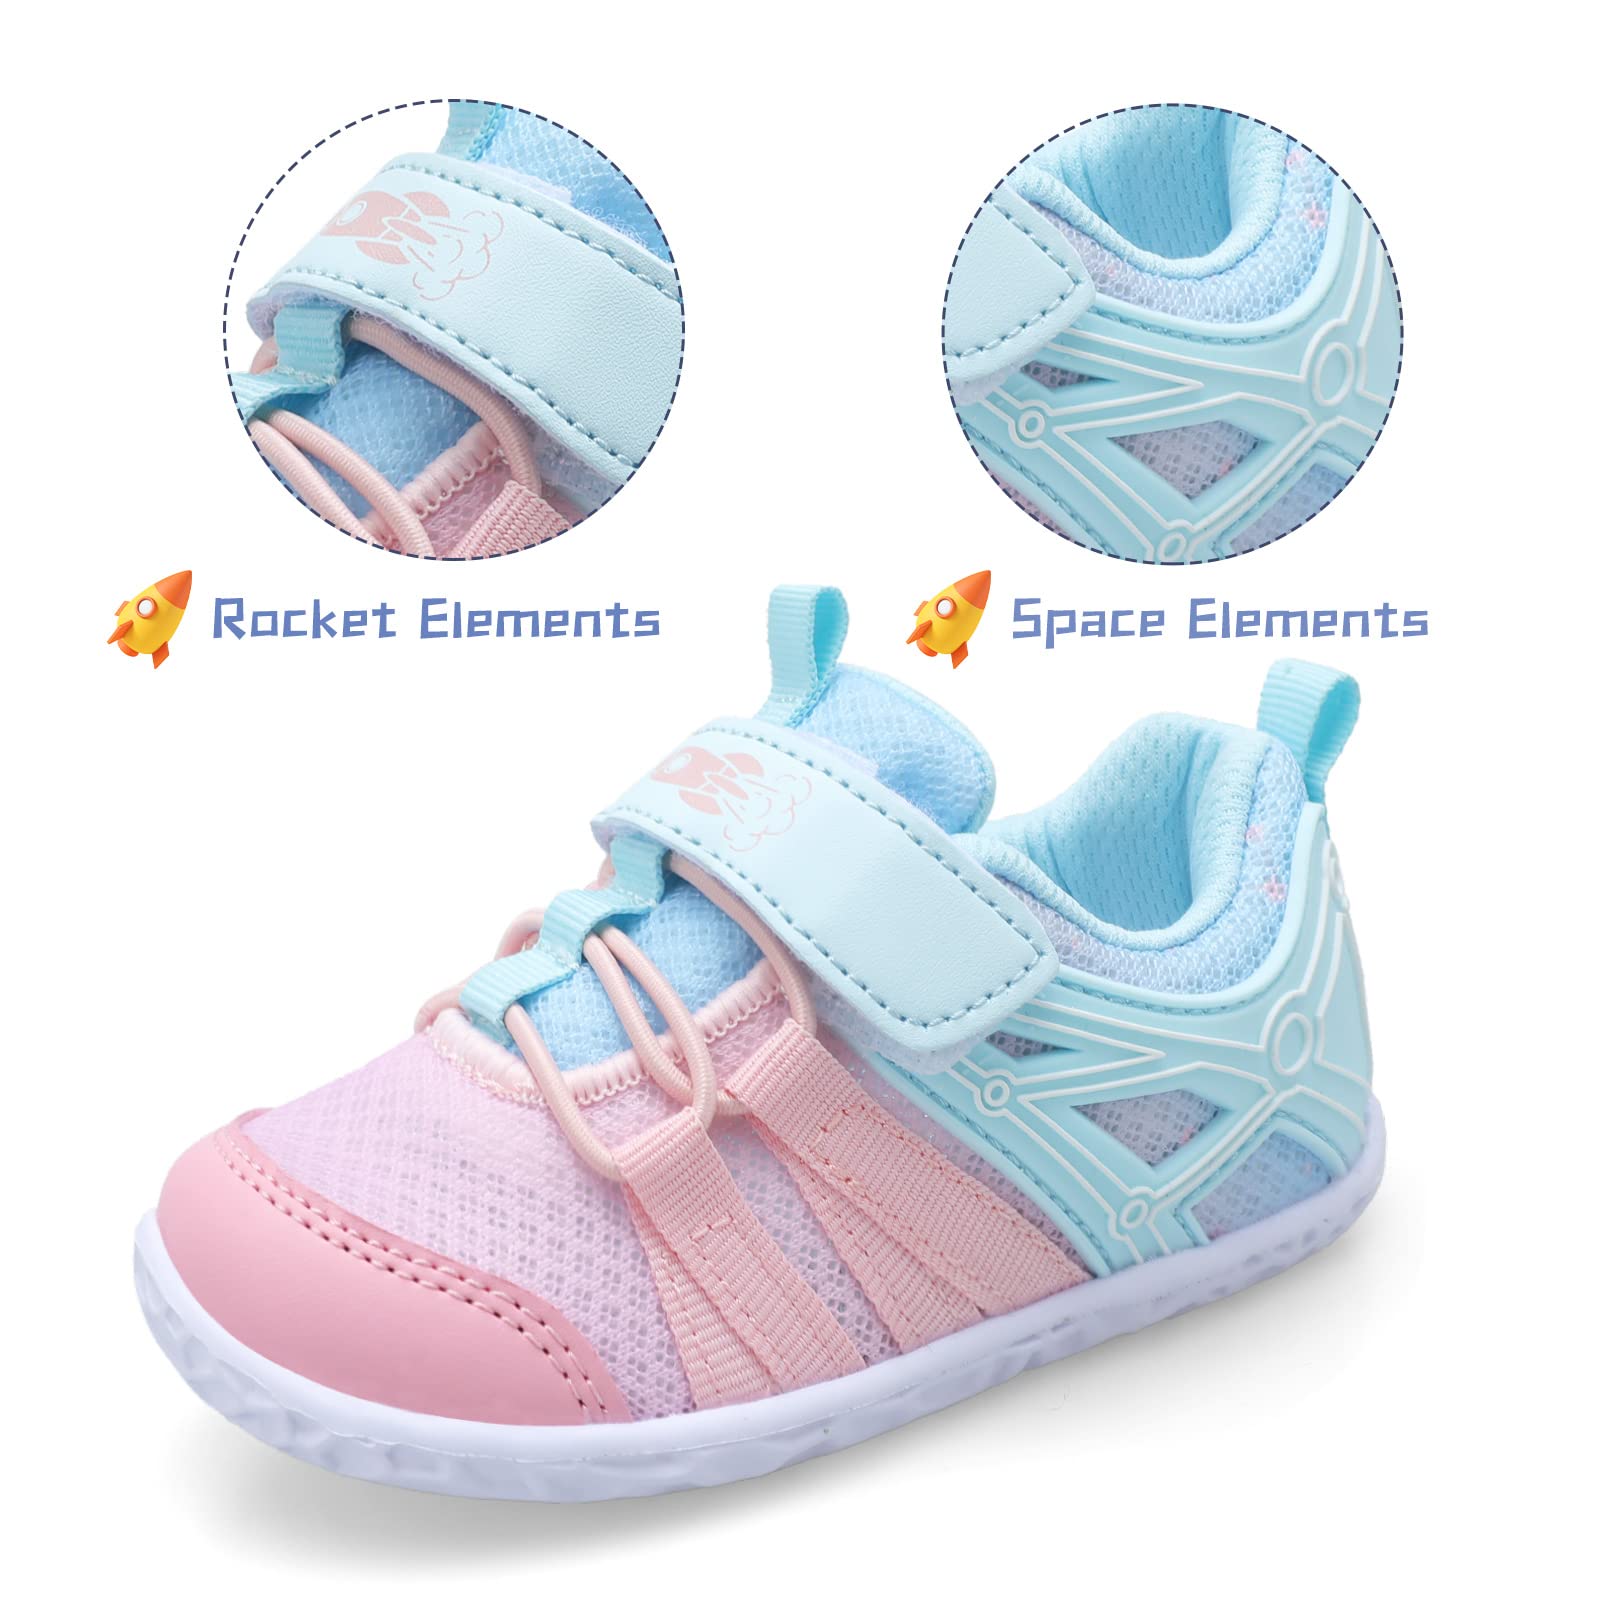 Scurtain Toddler Boys Girls Shoes Little Kids Barefoot Walking Shoes Lightweight Mesh Tennis Sneakers